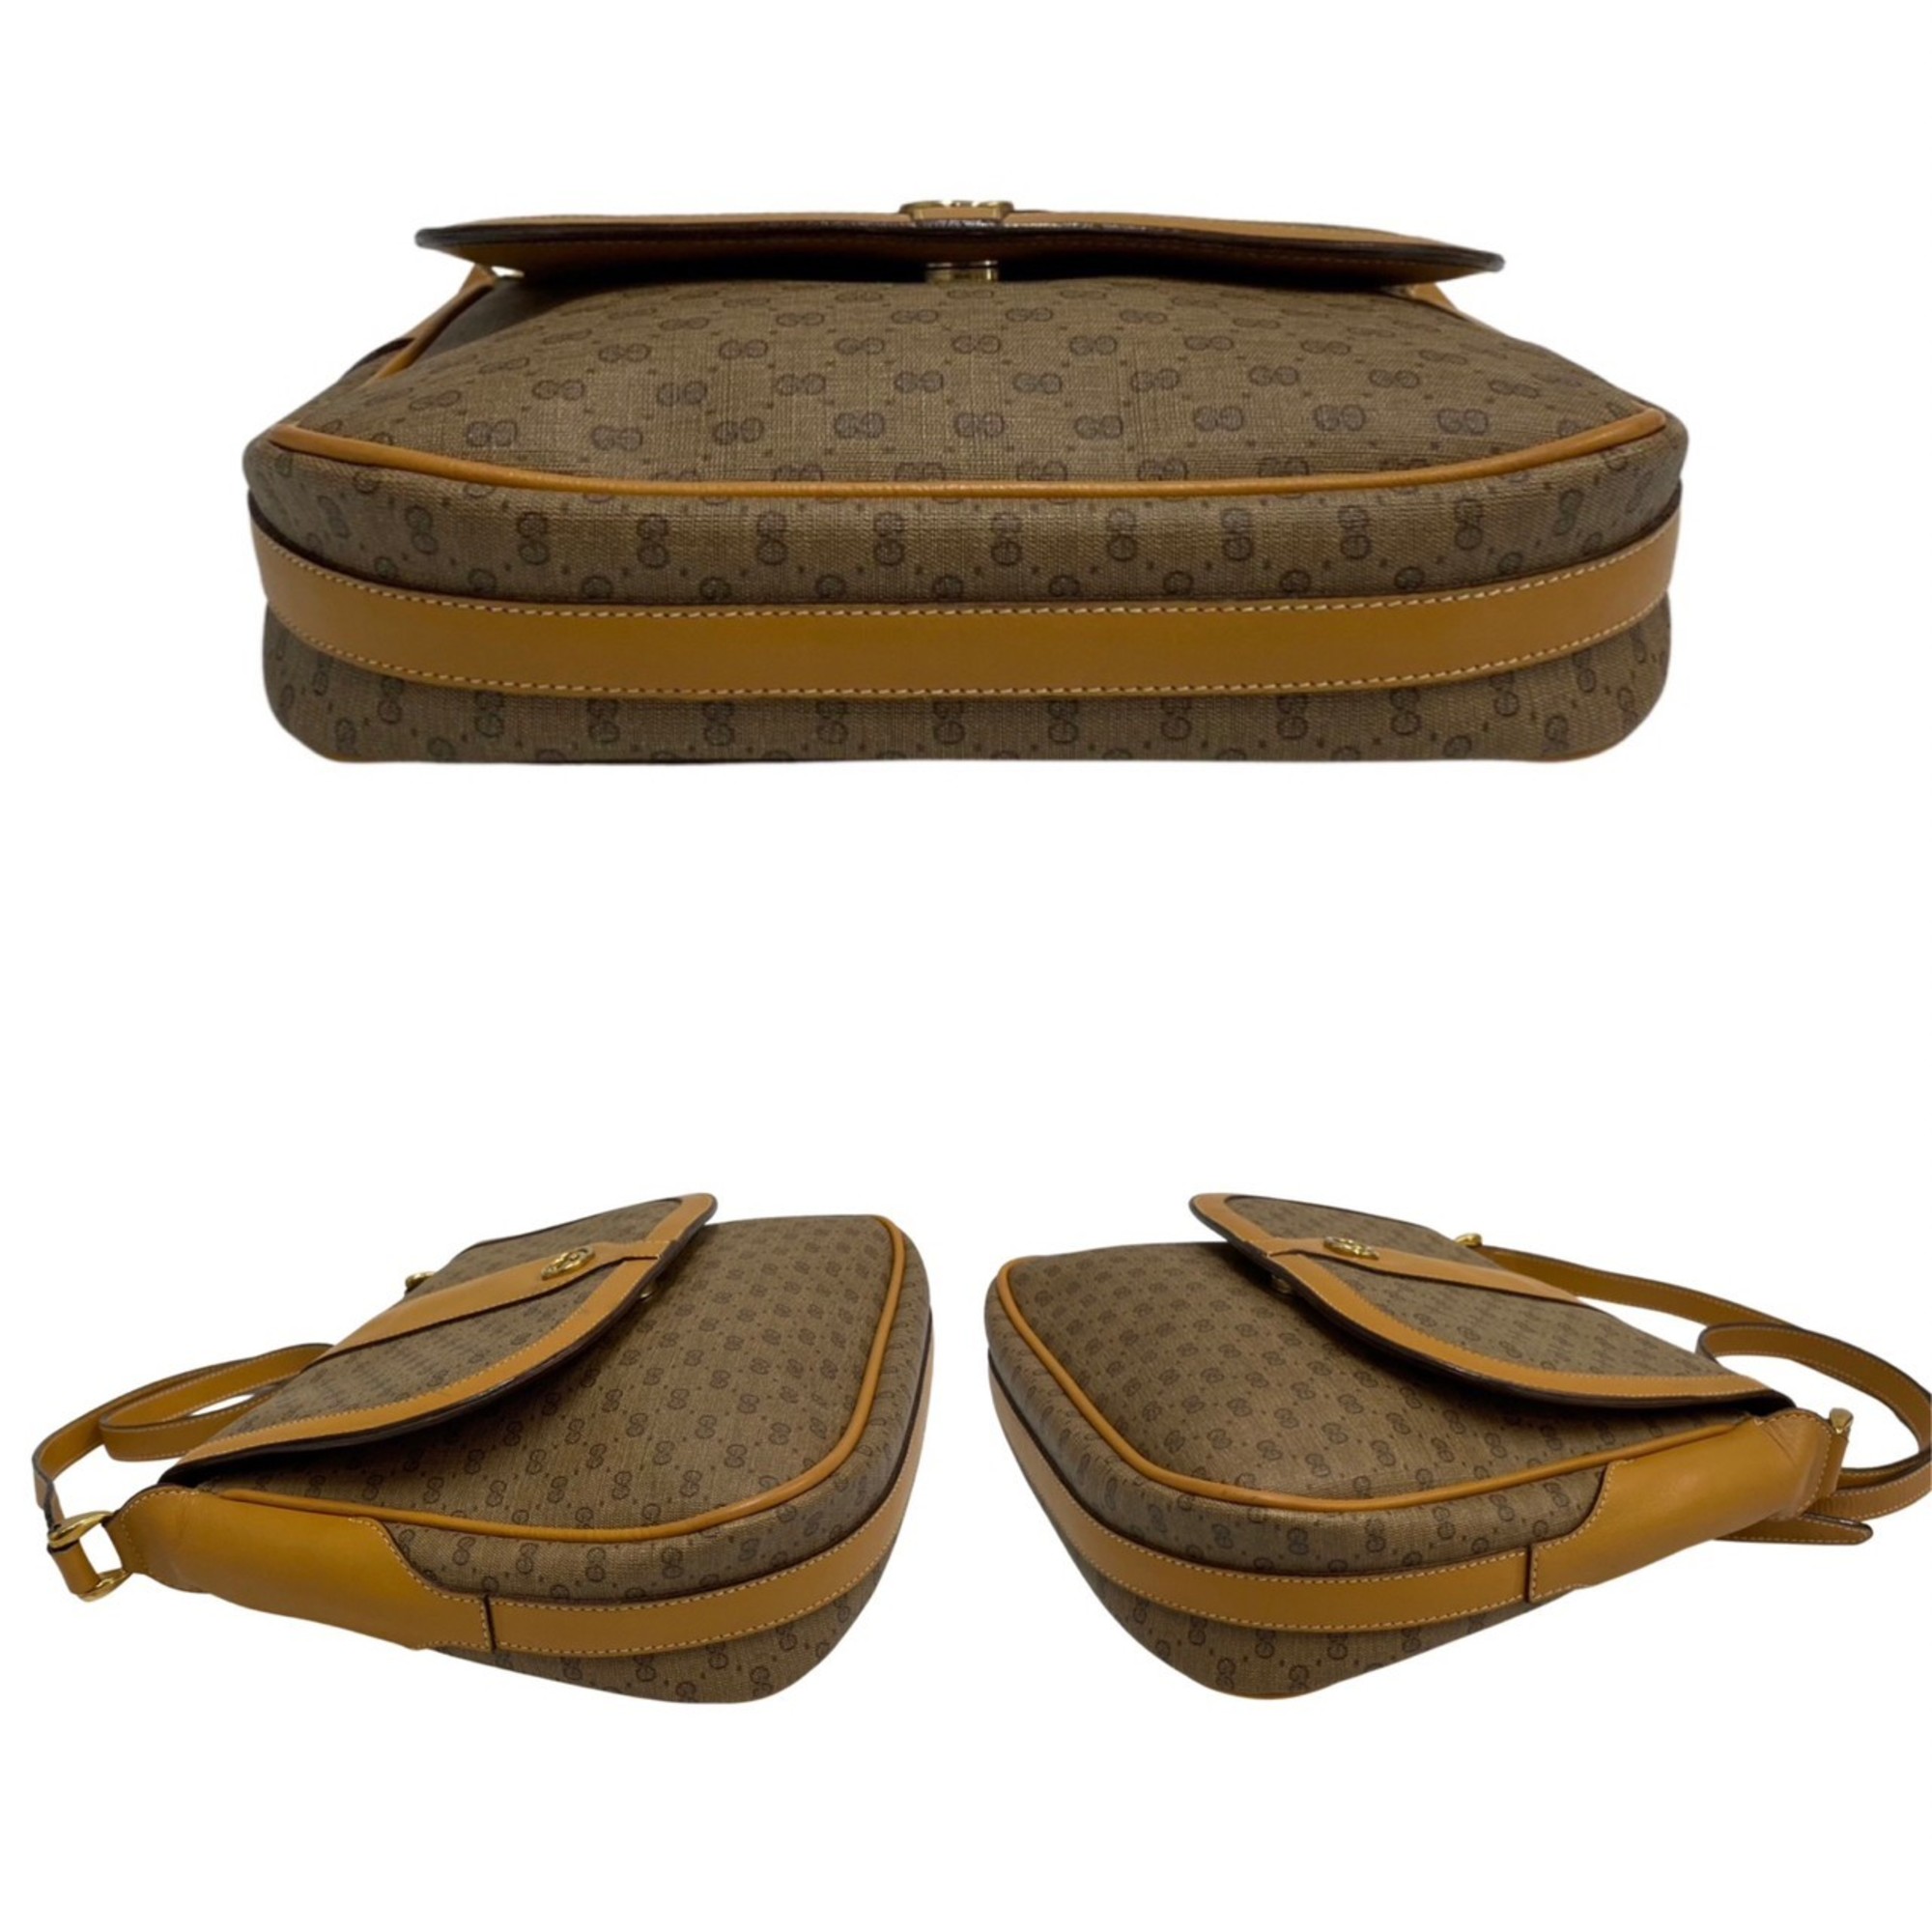 GUCCI Gucci Old Vintage Micro GG Logo Hardware Leather Mini Shoulder Bag Pochette Brown